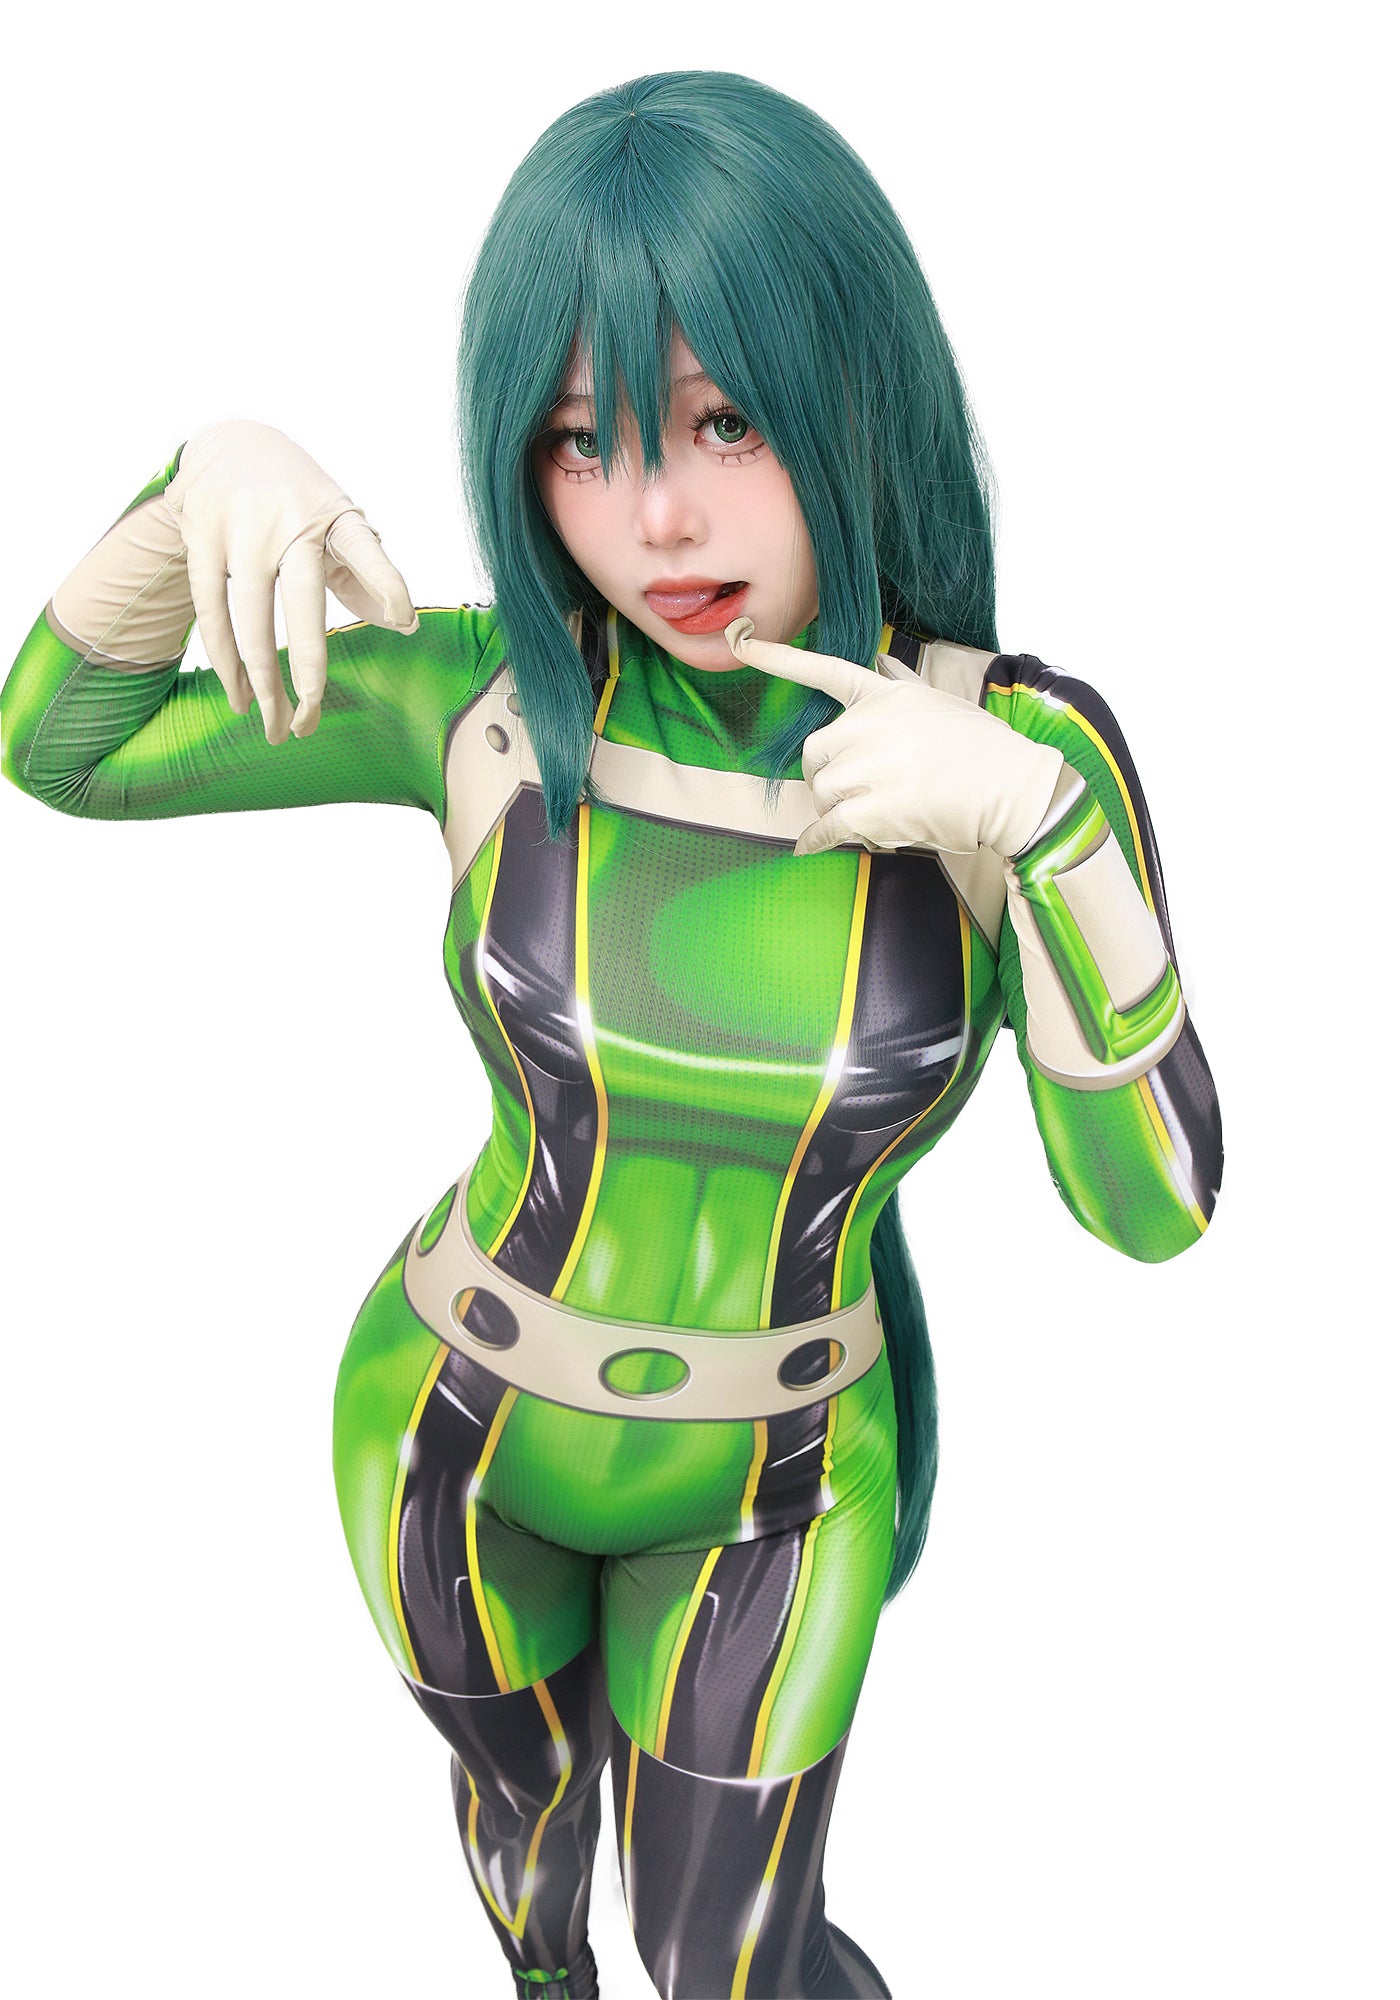 DAZCOS Womens US Size 0-18 Froppy Asui Tsuyu Cosplay Costume Anime Green Bodysuit